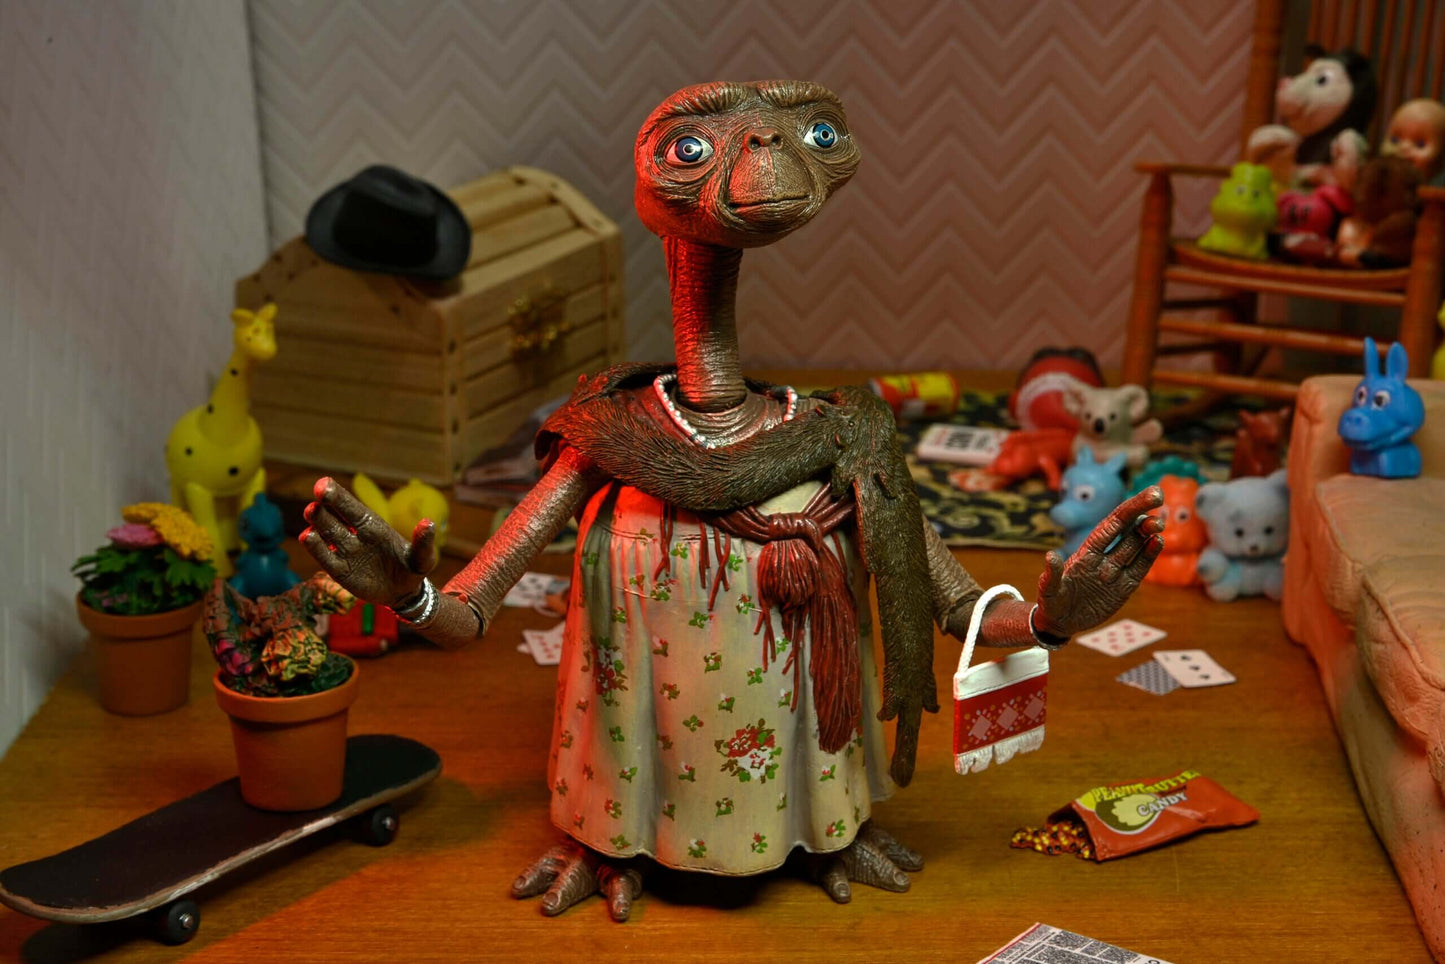 E.T. 40th Anniversary

7” Scale Action Figure – Ultimate Dress Up E.T.